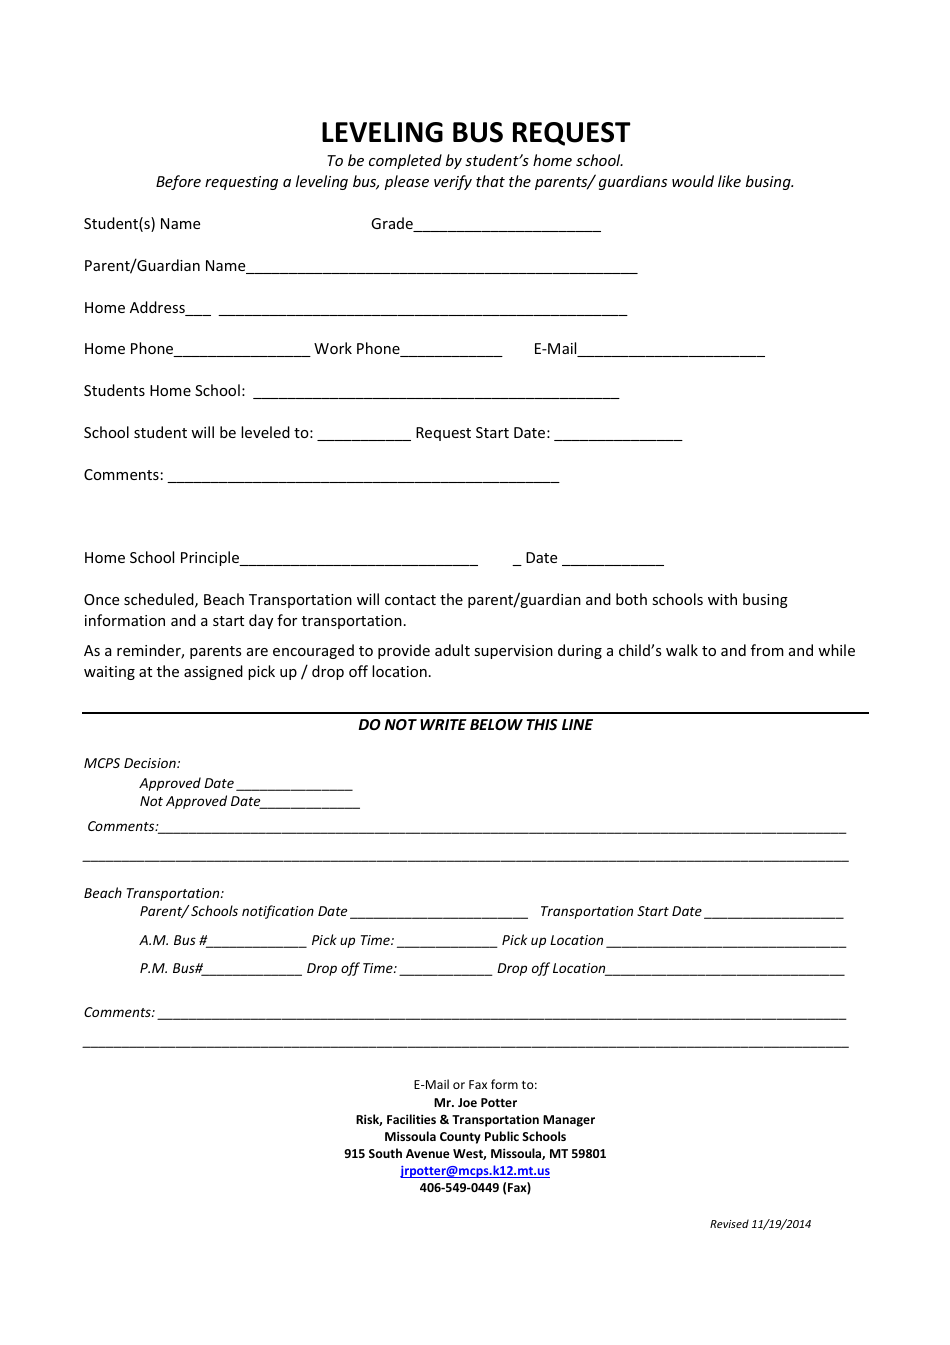 Leveling Bus Request Form - Missoula County Public Schools - Montana, Page 1